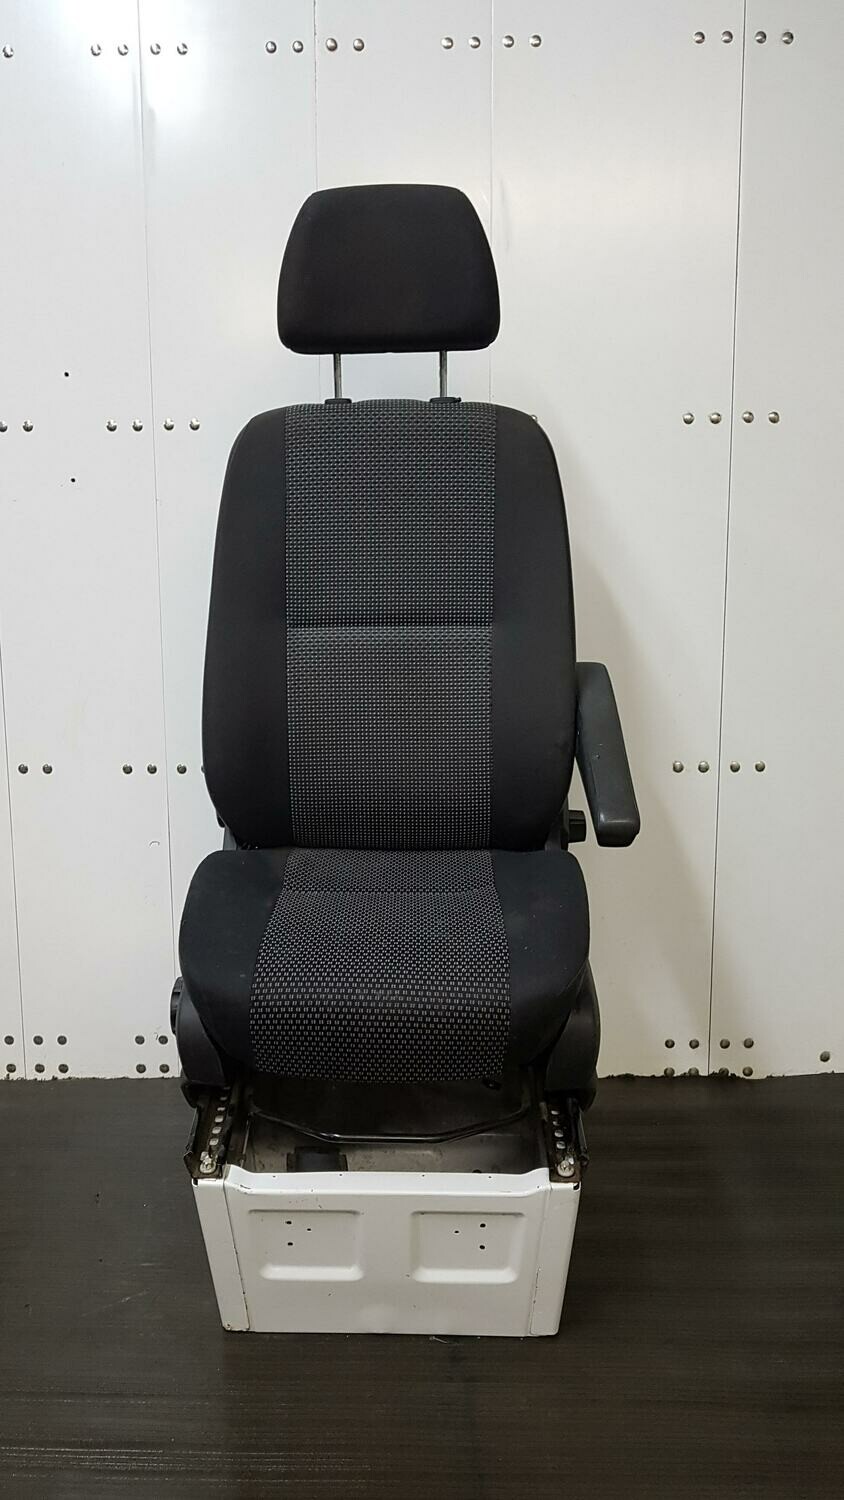 Mercedes Sprinter Passenger Seat W/ Base